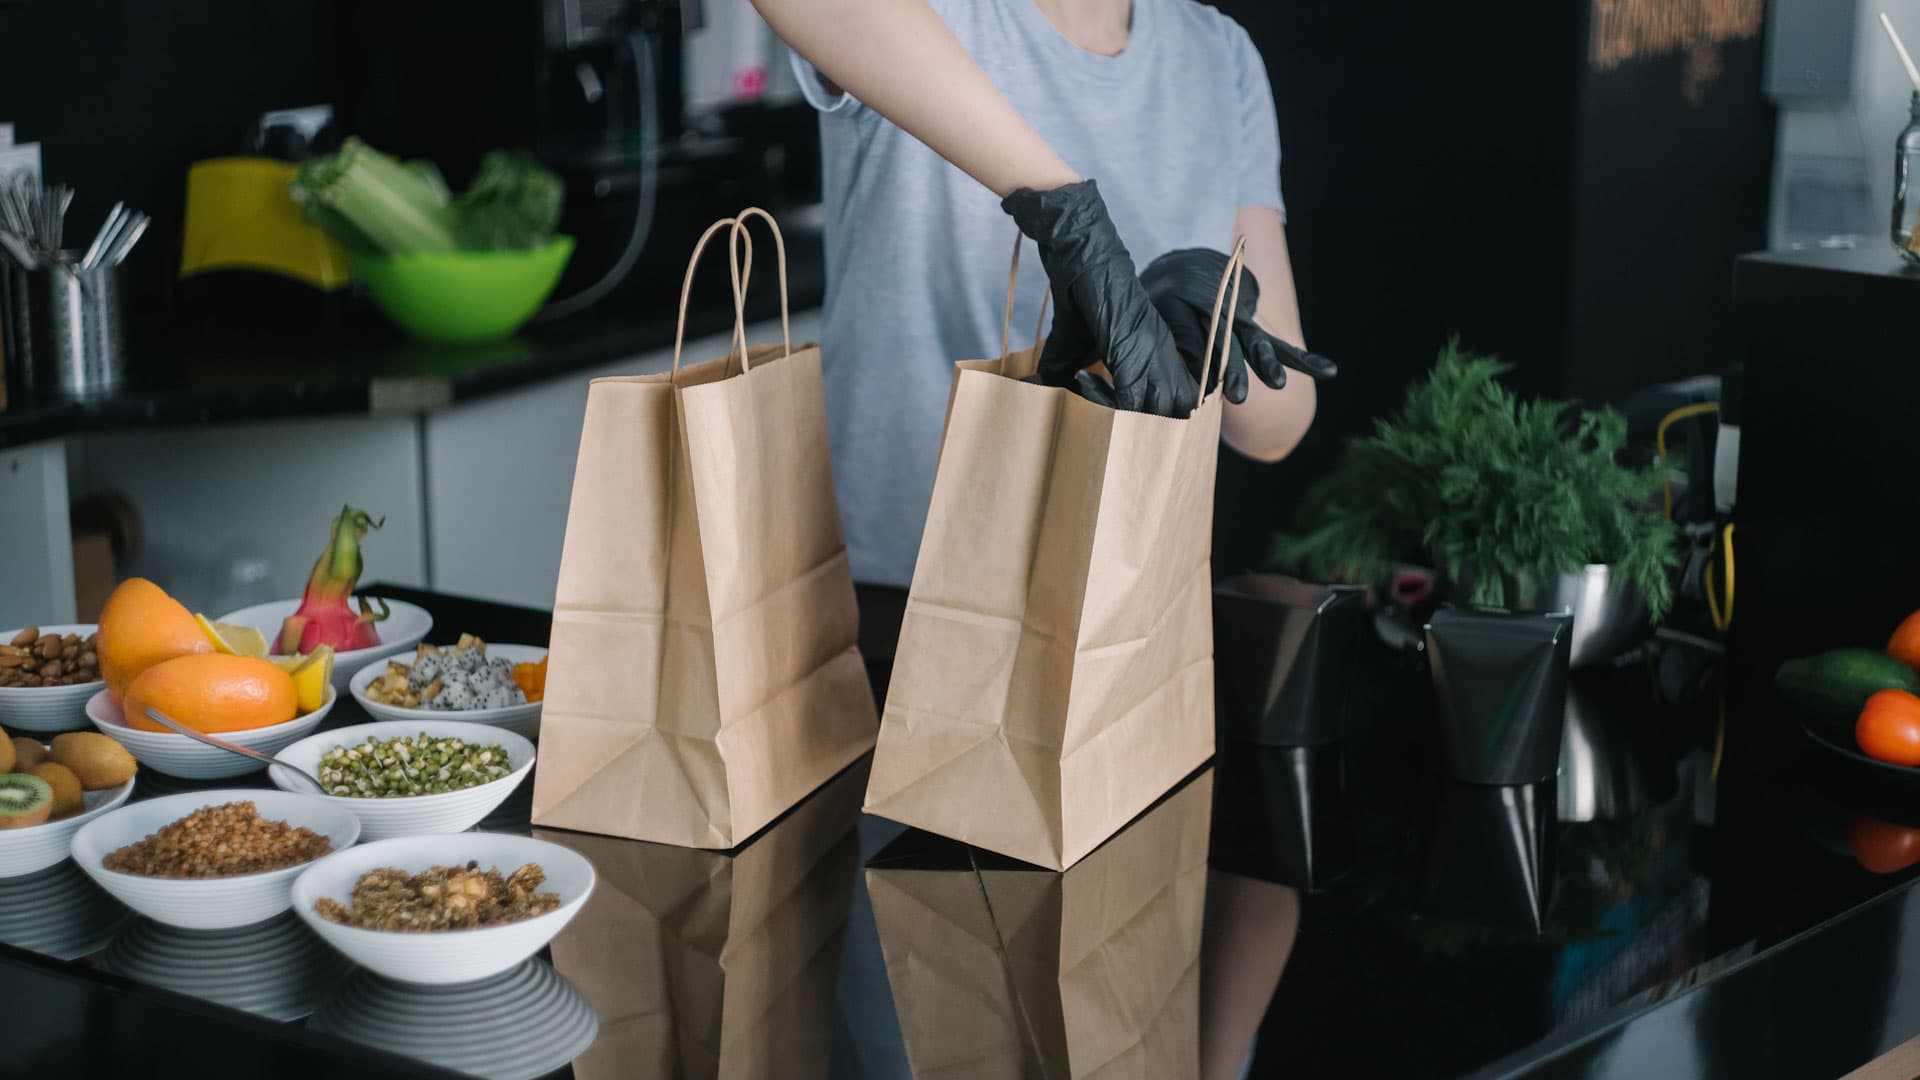 Persona con guates guardando comida para llevar en bolsa de cartón